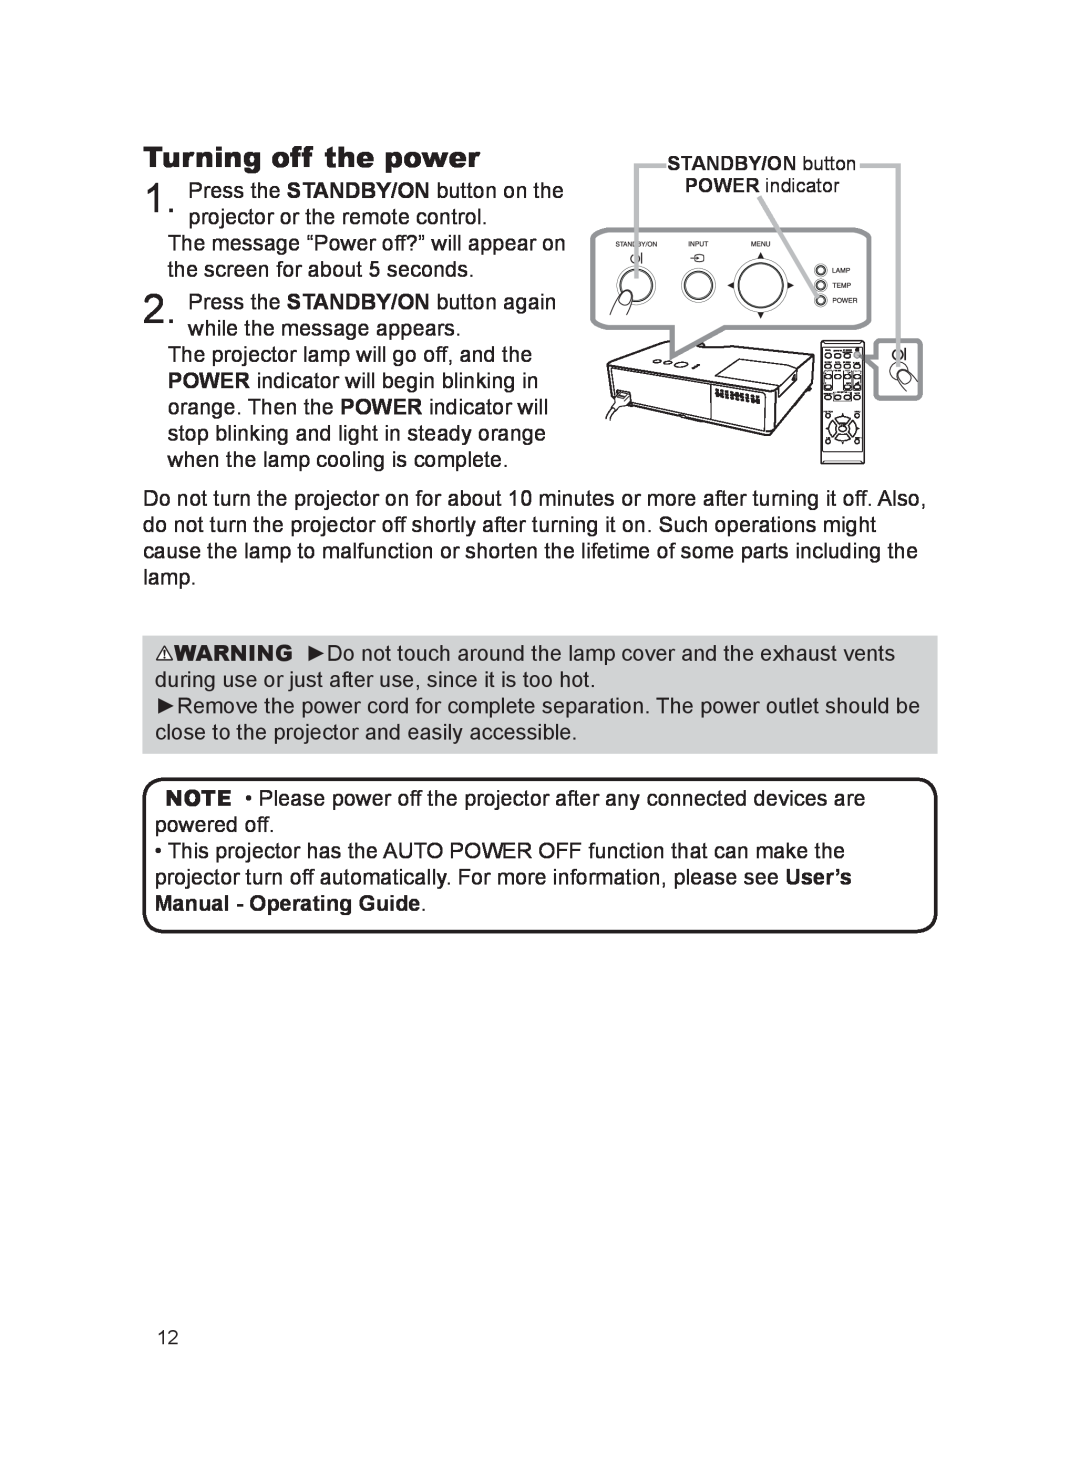 Dukane 8793h user manual Turning off the power, POWER indicator 